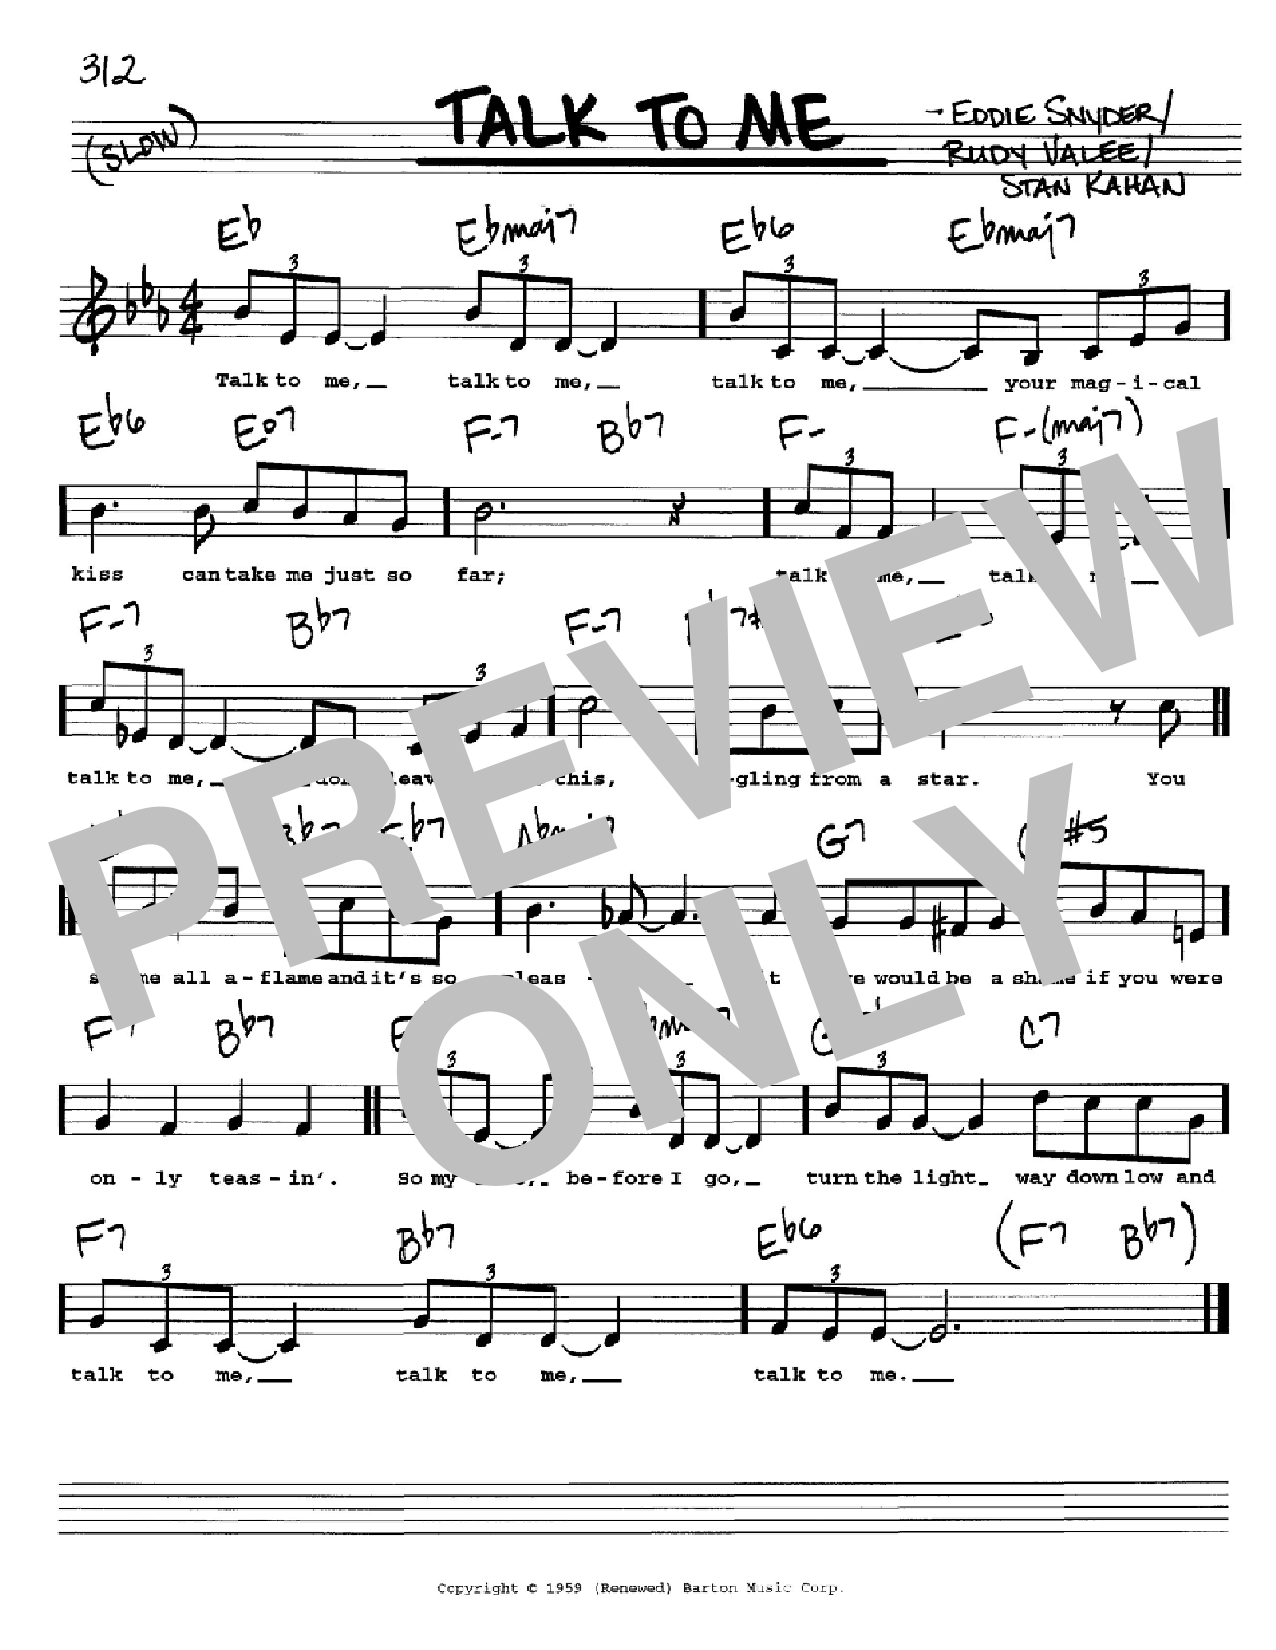 Eddie Snyder Talk To Me Sheet Music Notes & Chords for Melody Line, Lyrics & Chords - Download or Print PDF